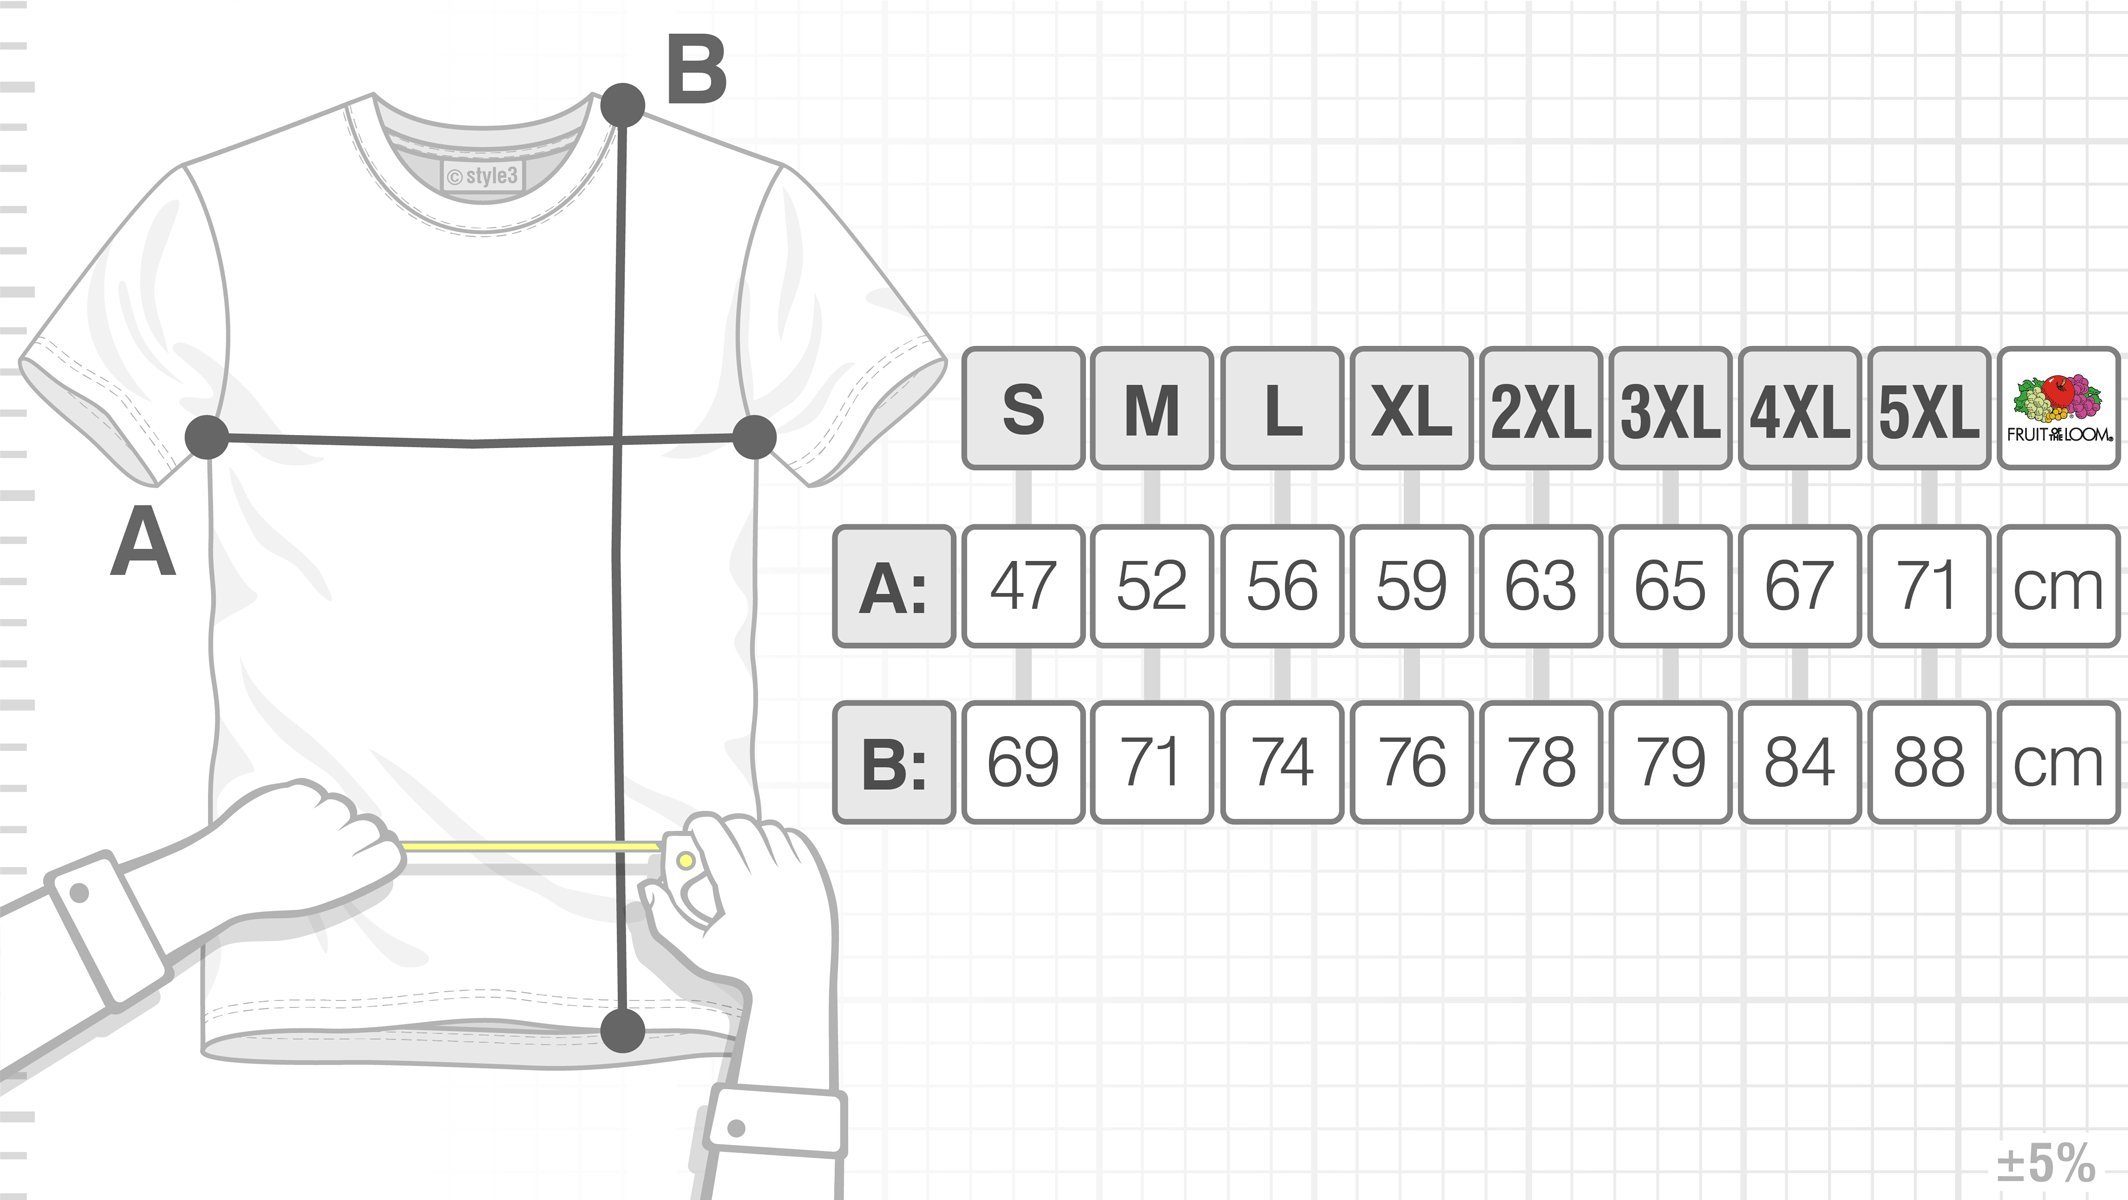 boy poke Herren team T-Shirt arena Explore Print-Shirt pokeball pikachu Go app style3 game pokespot weiß